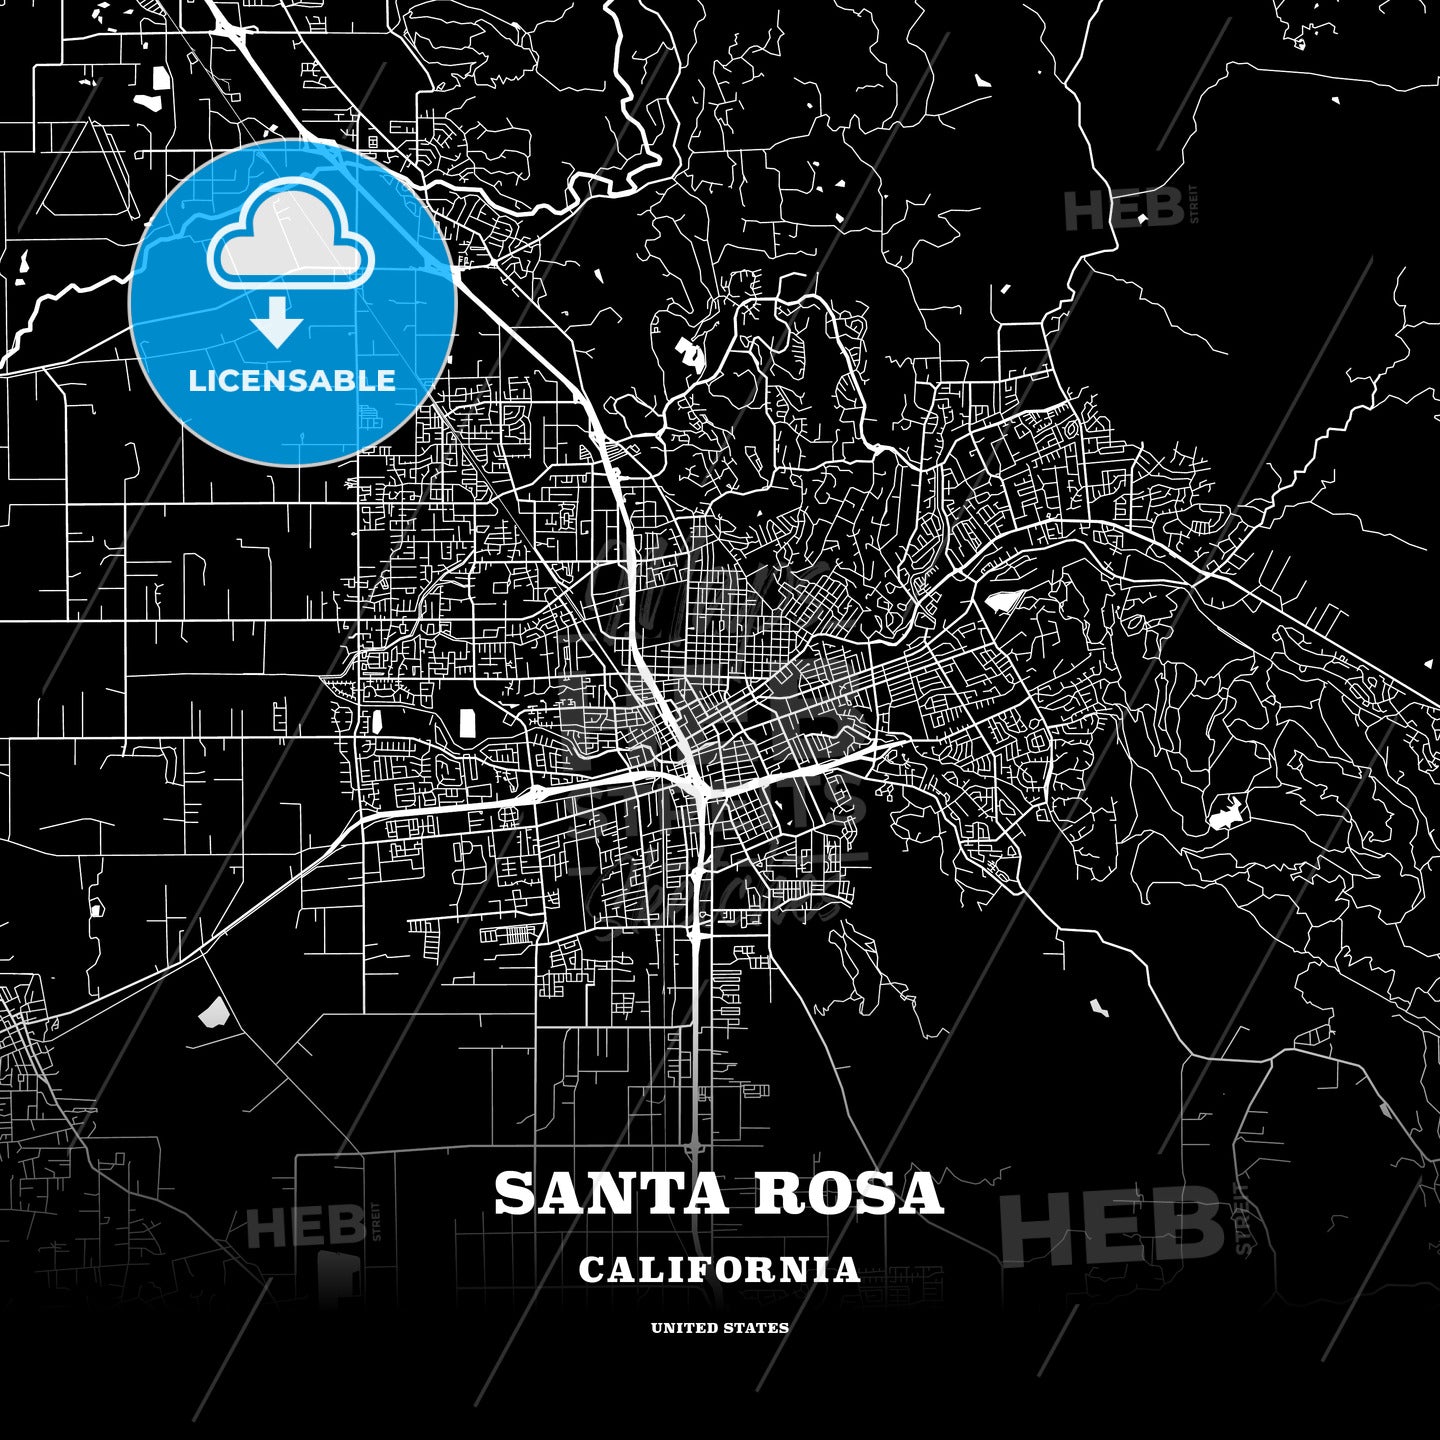 Santa Rosa, California, USA map